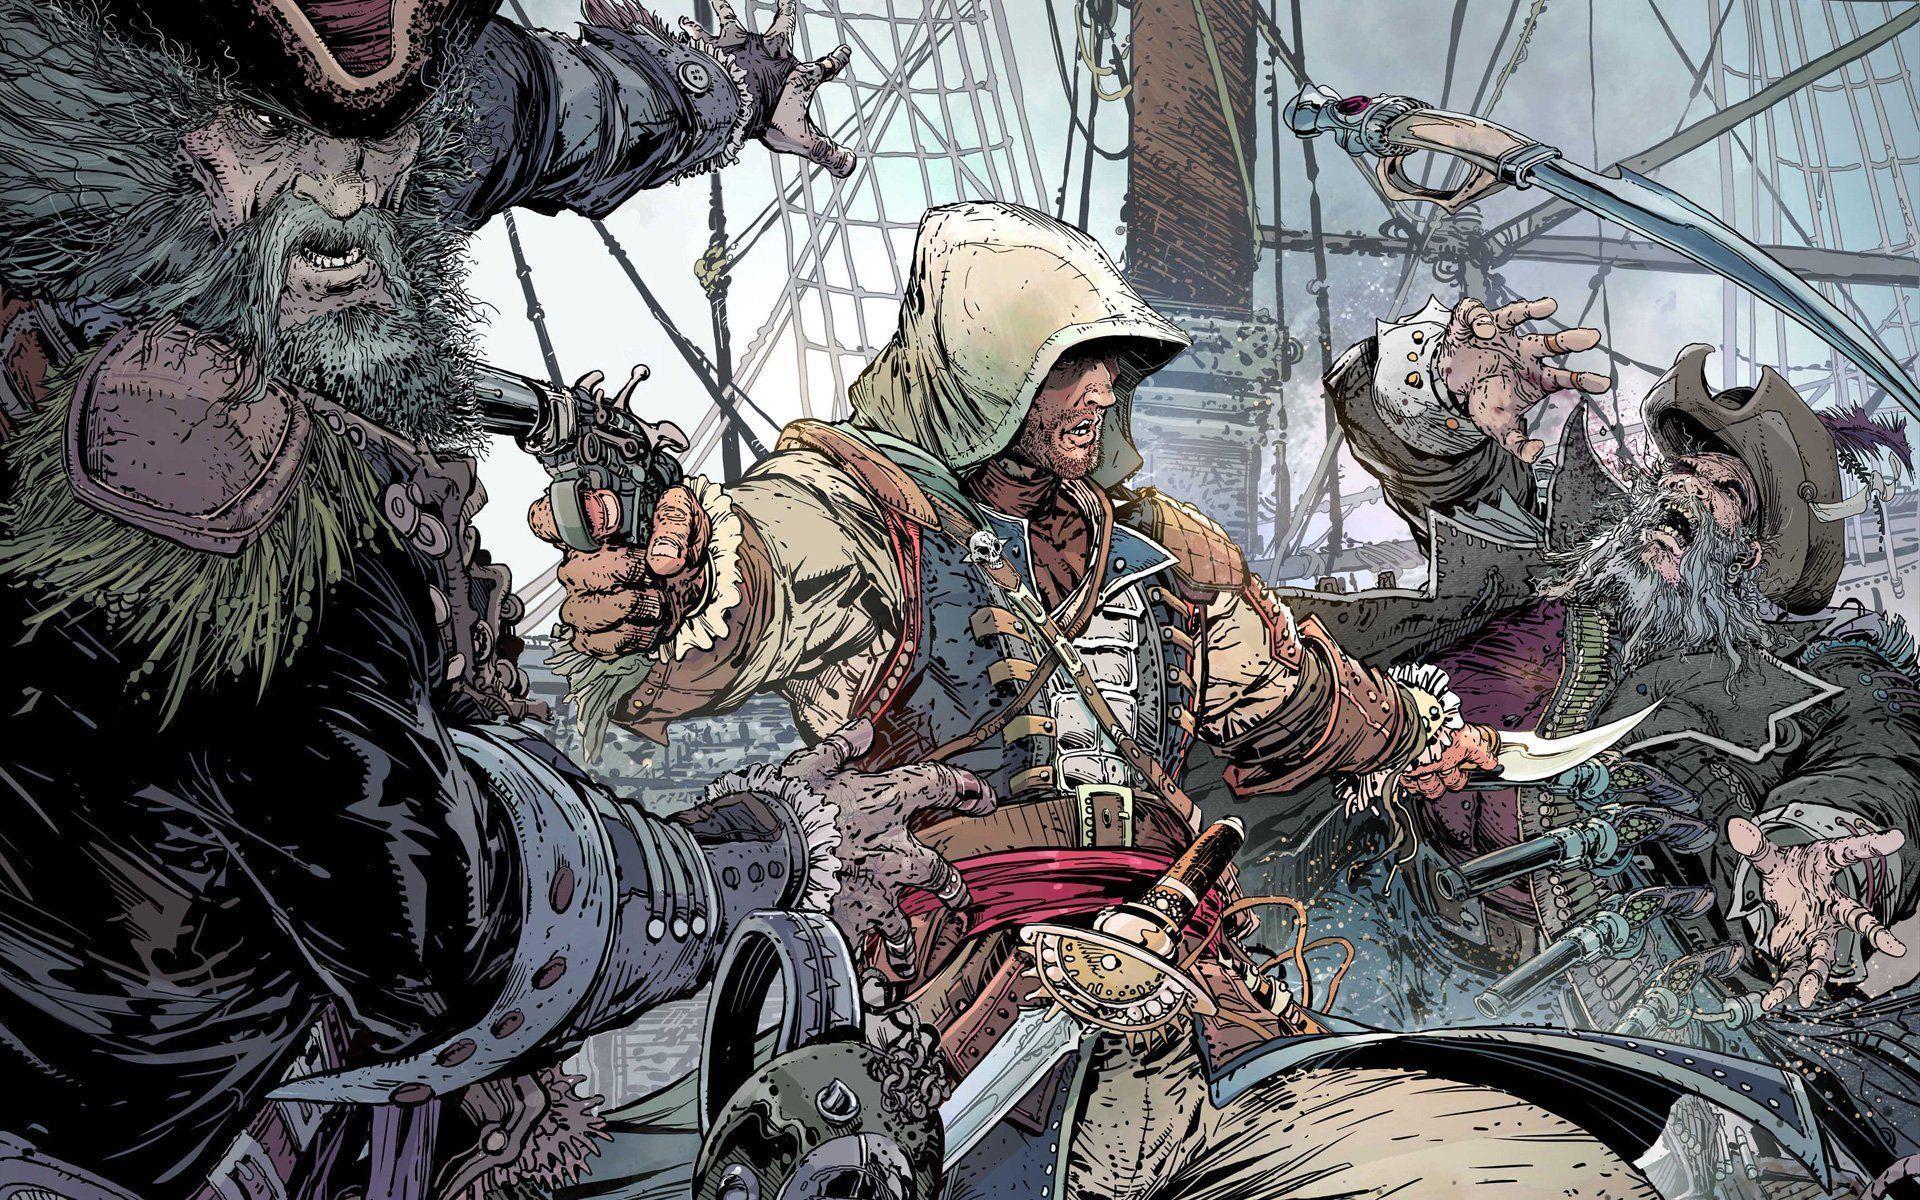 Assassin's Creed IV: Black Flag HD Wallpaper. Background